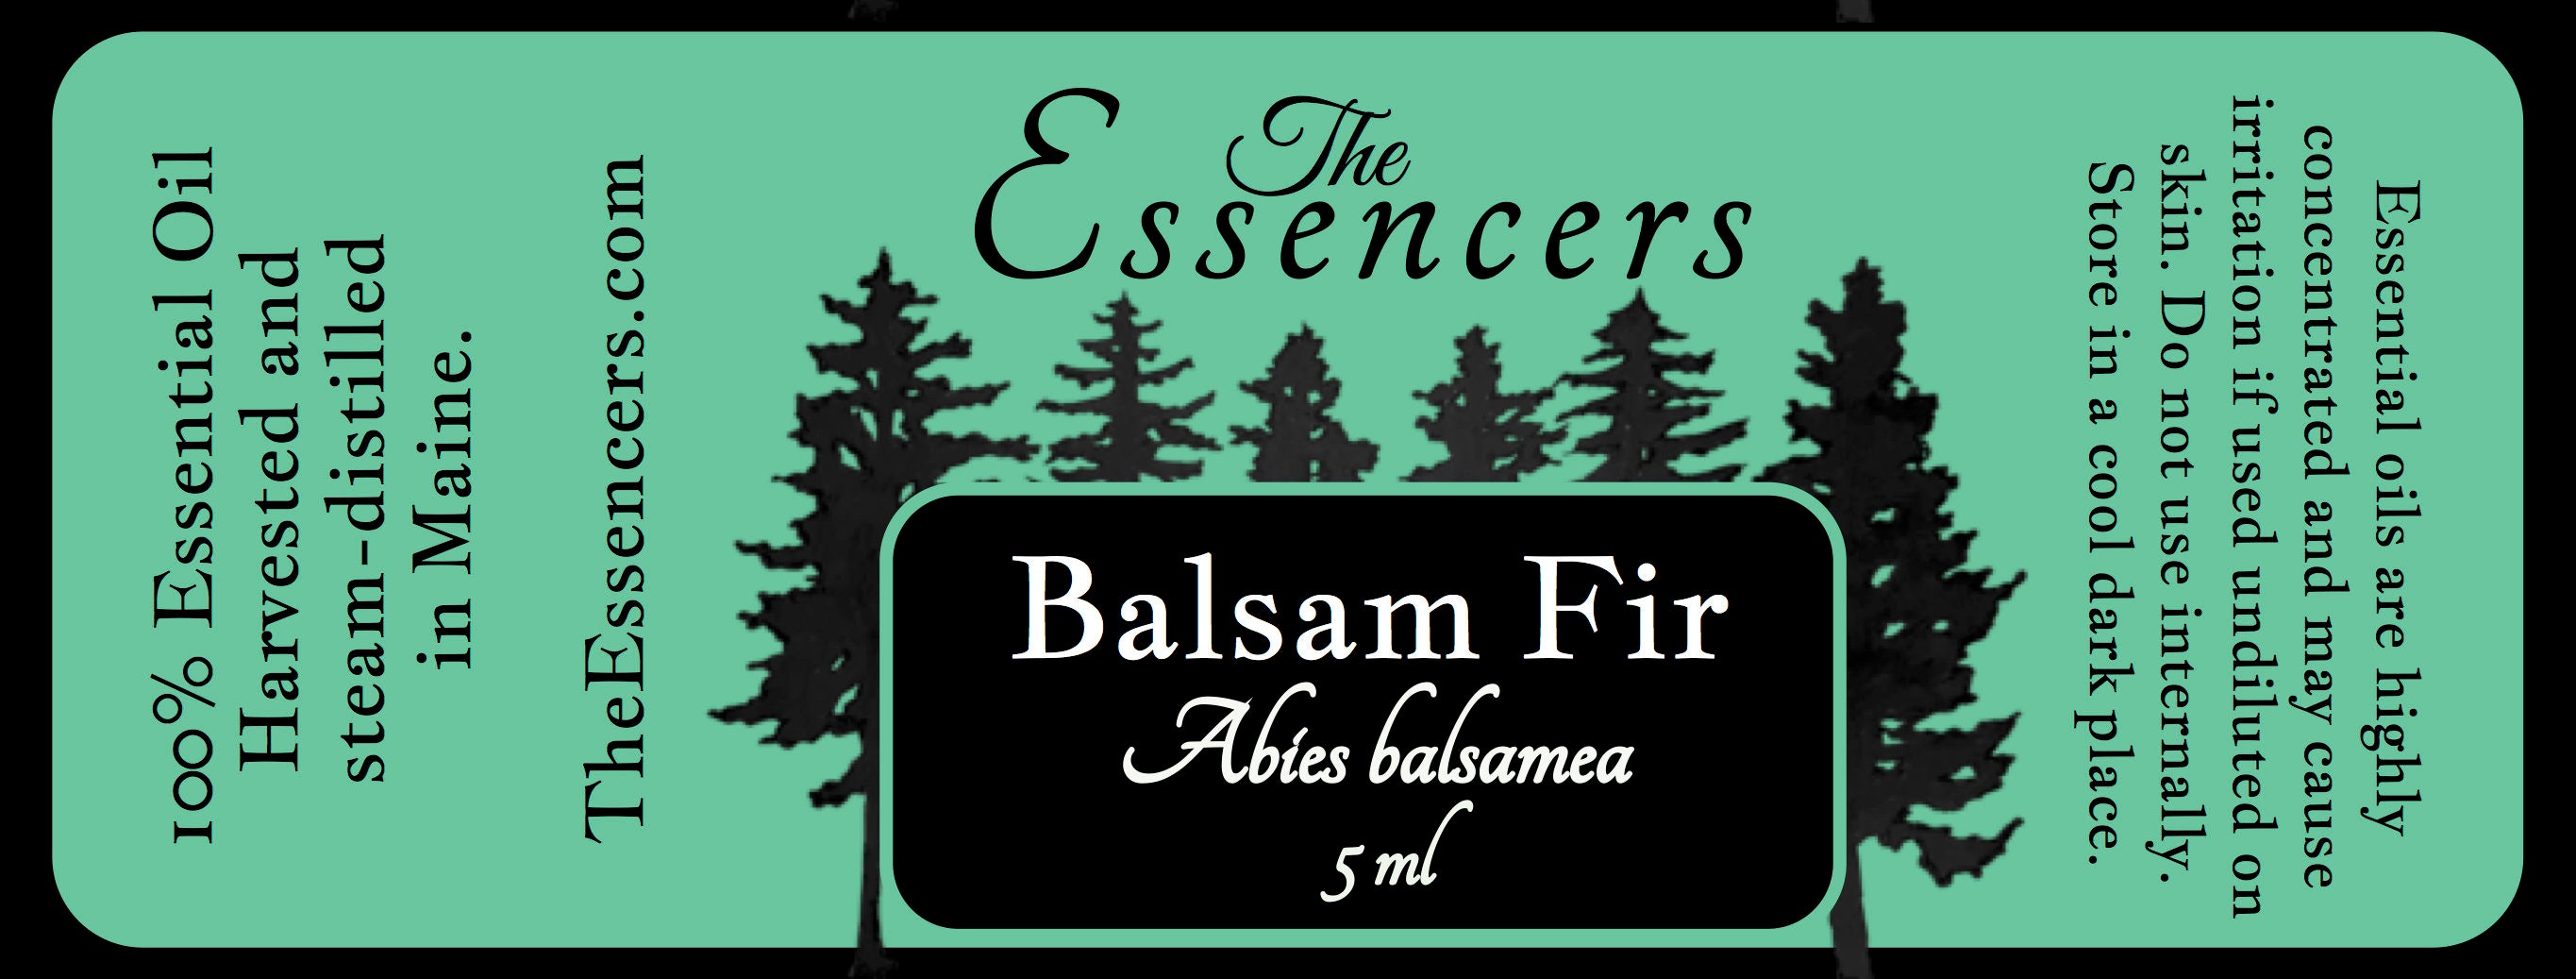 Balsam Fir Essential Oil Artisan Distilled in Maine 